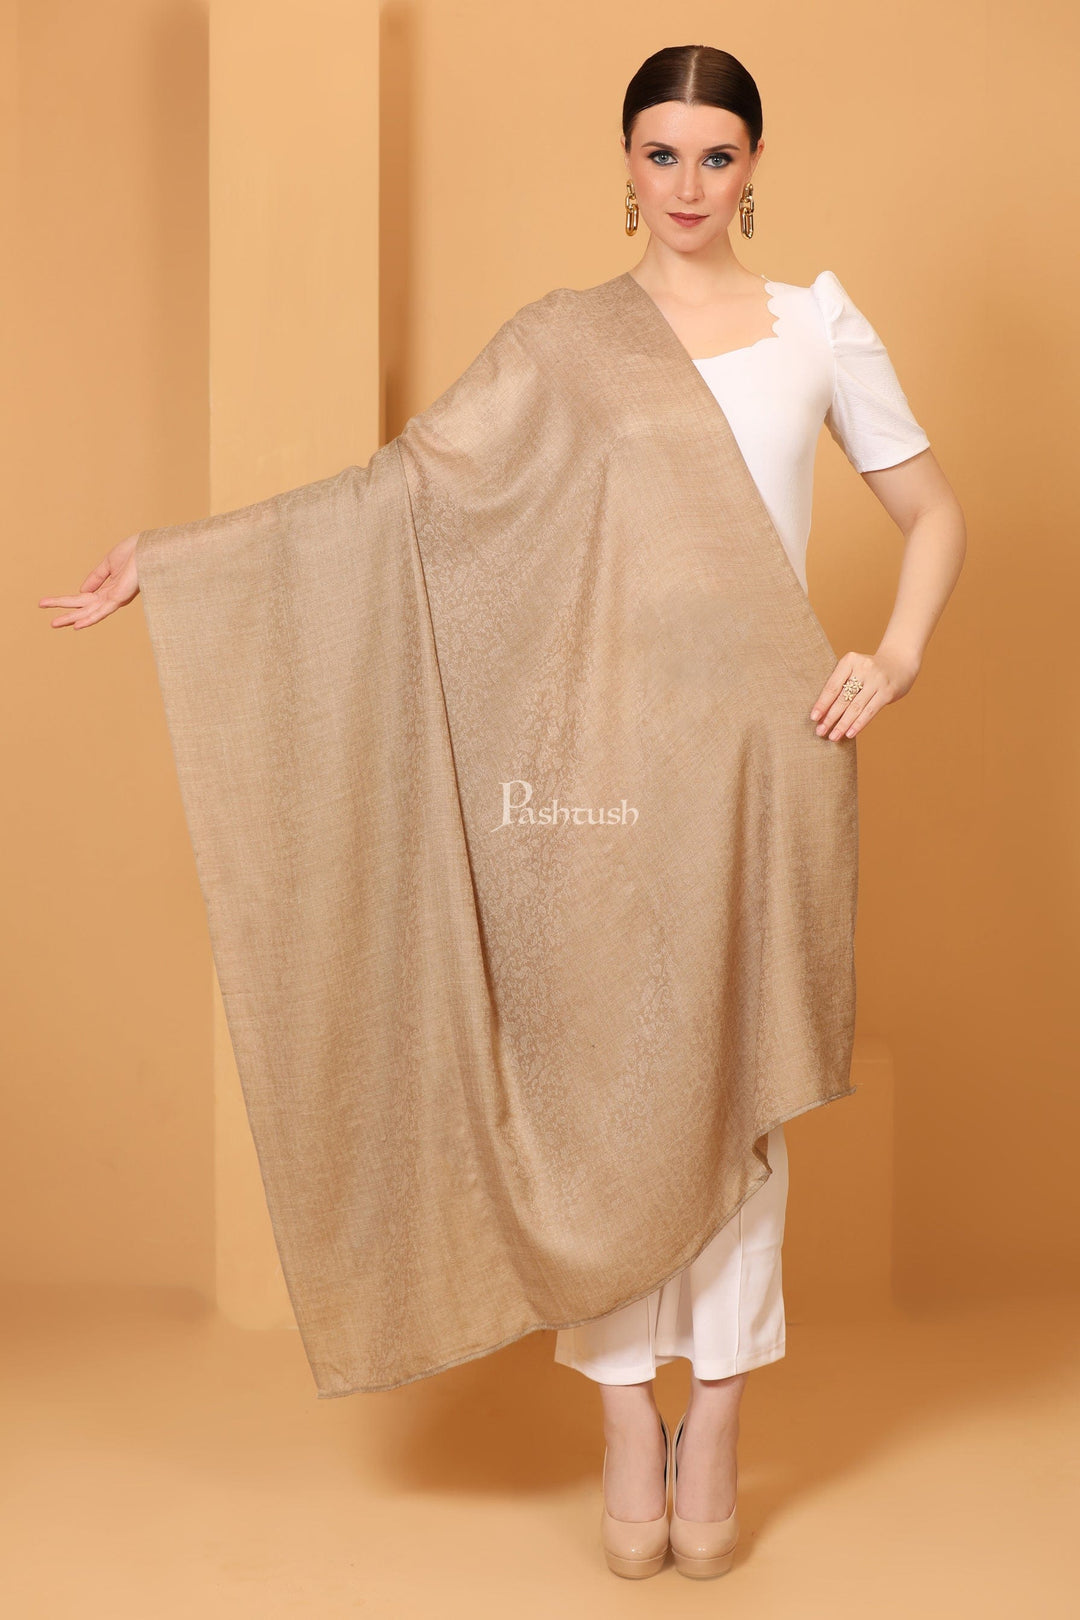 Pashtush India Womens Shawls Pashtush Womens Fine Wool Shawl, Self Paisley Weave, Extra Soft, Warm and Light, Natural Beige